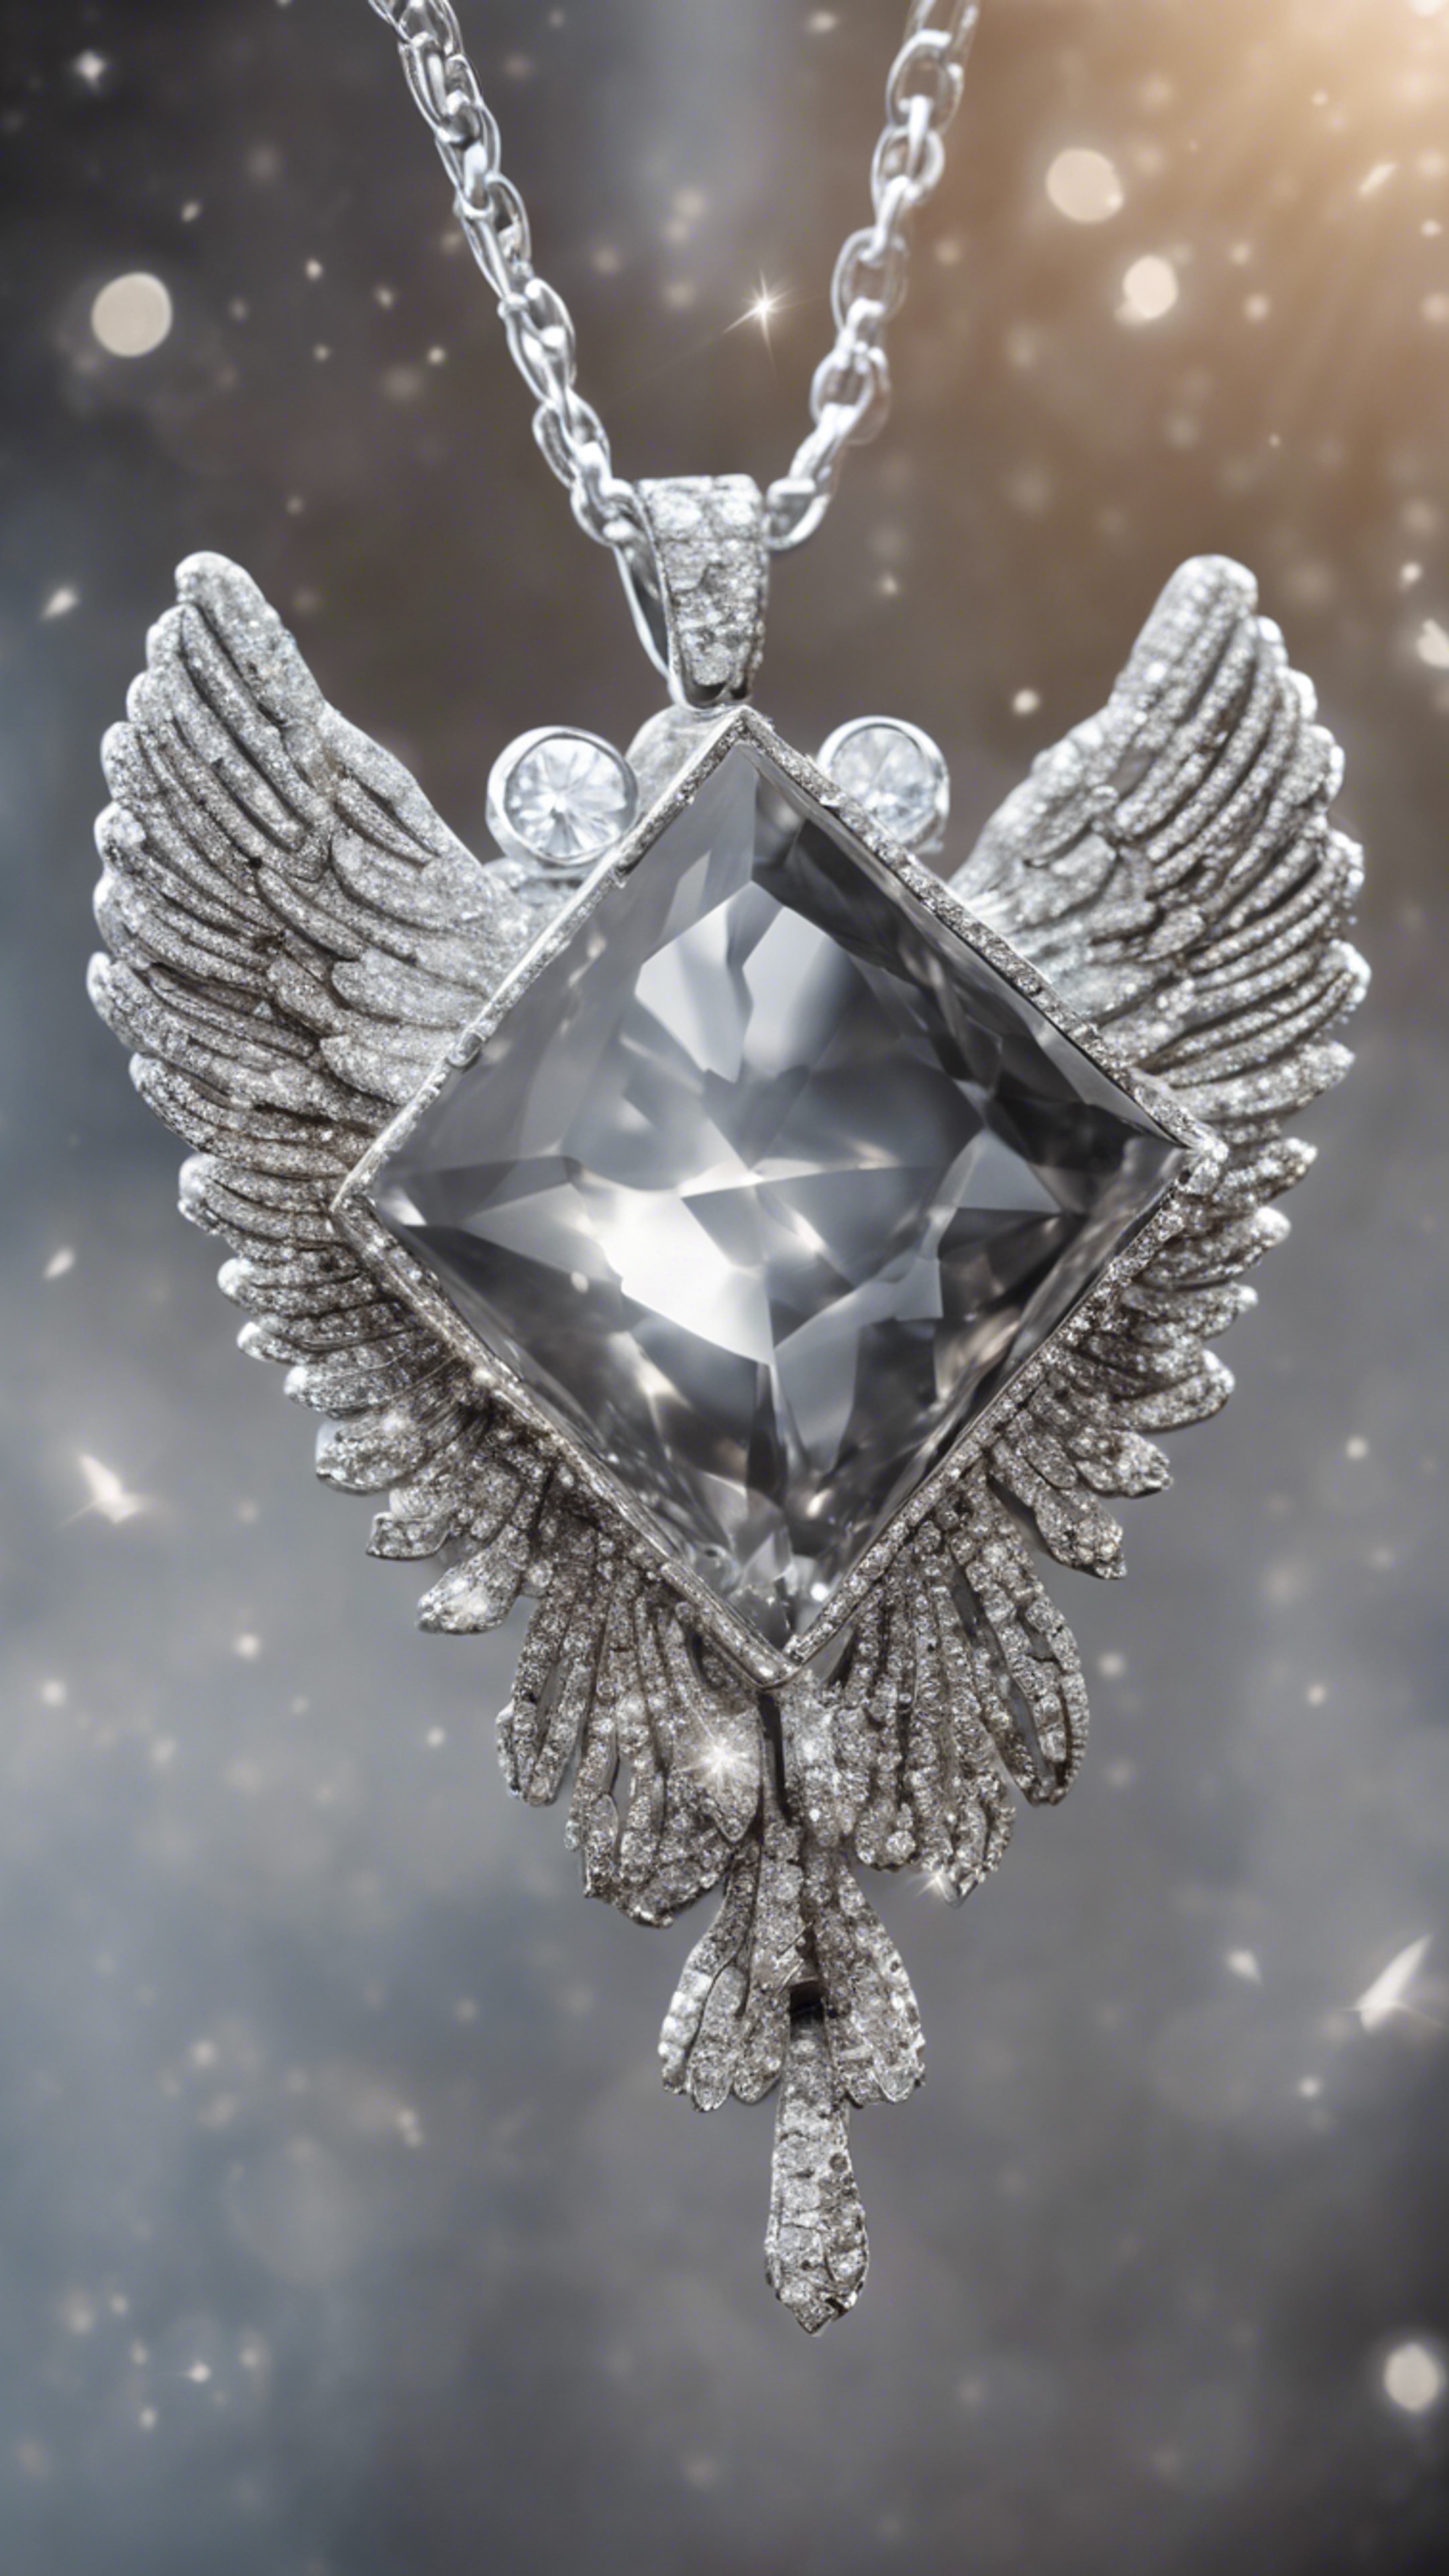 A gray diamond wrapped in the wings of a silver angel pendant. Ფონი[ad1b9e387c144e34b8b5]